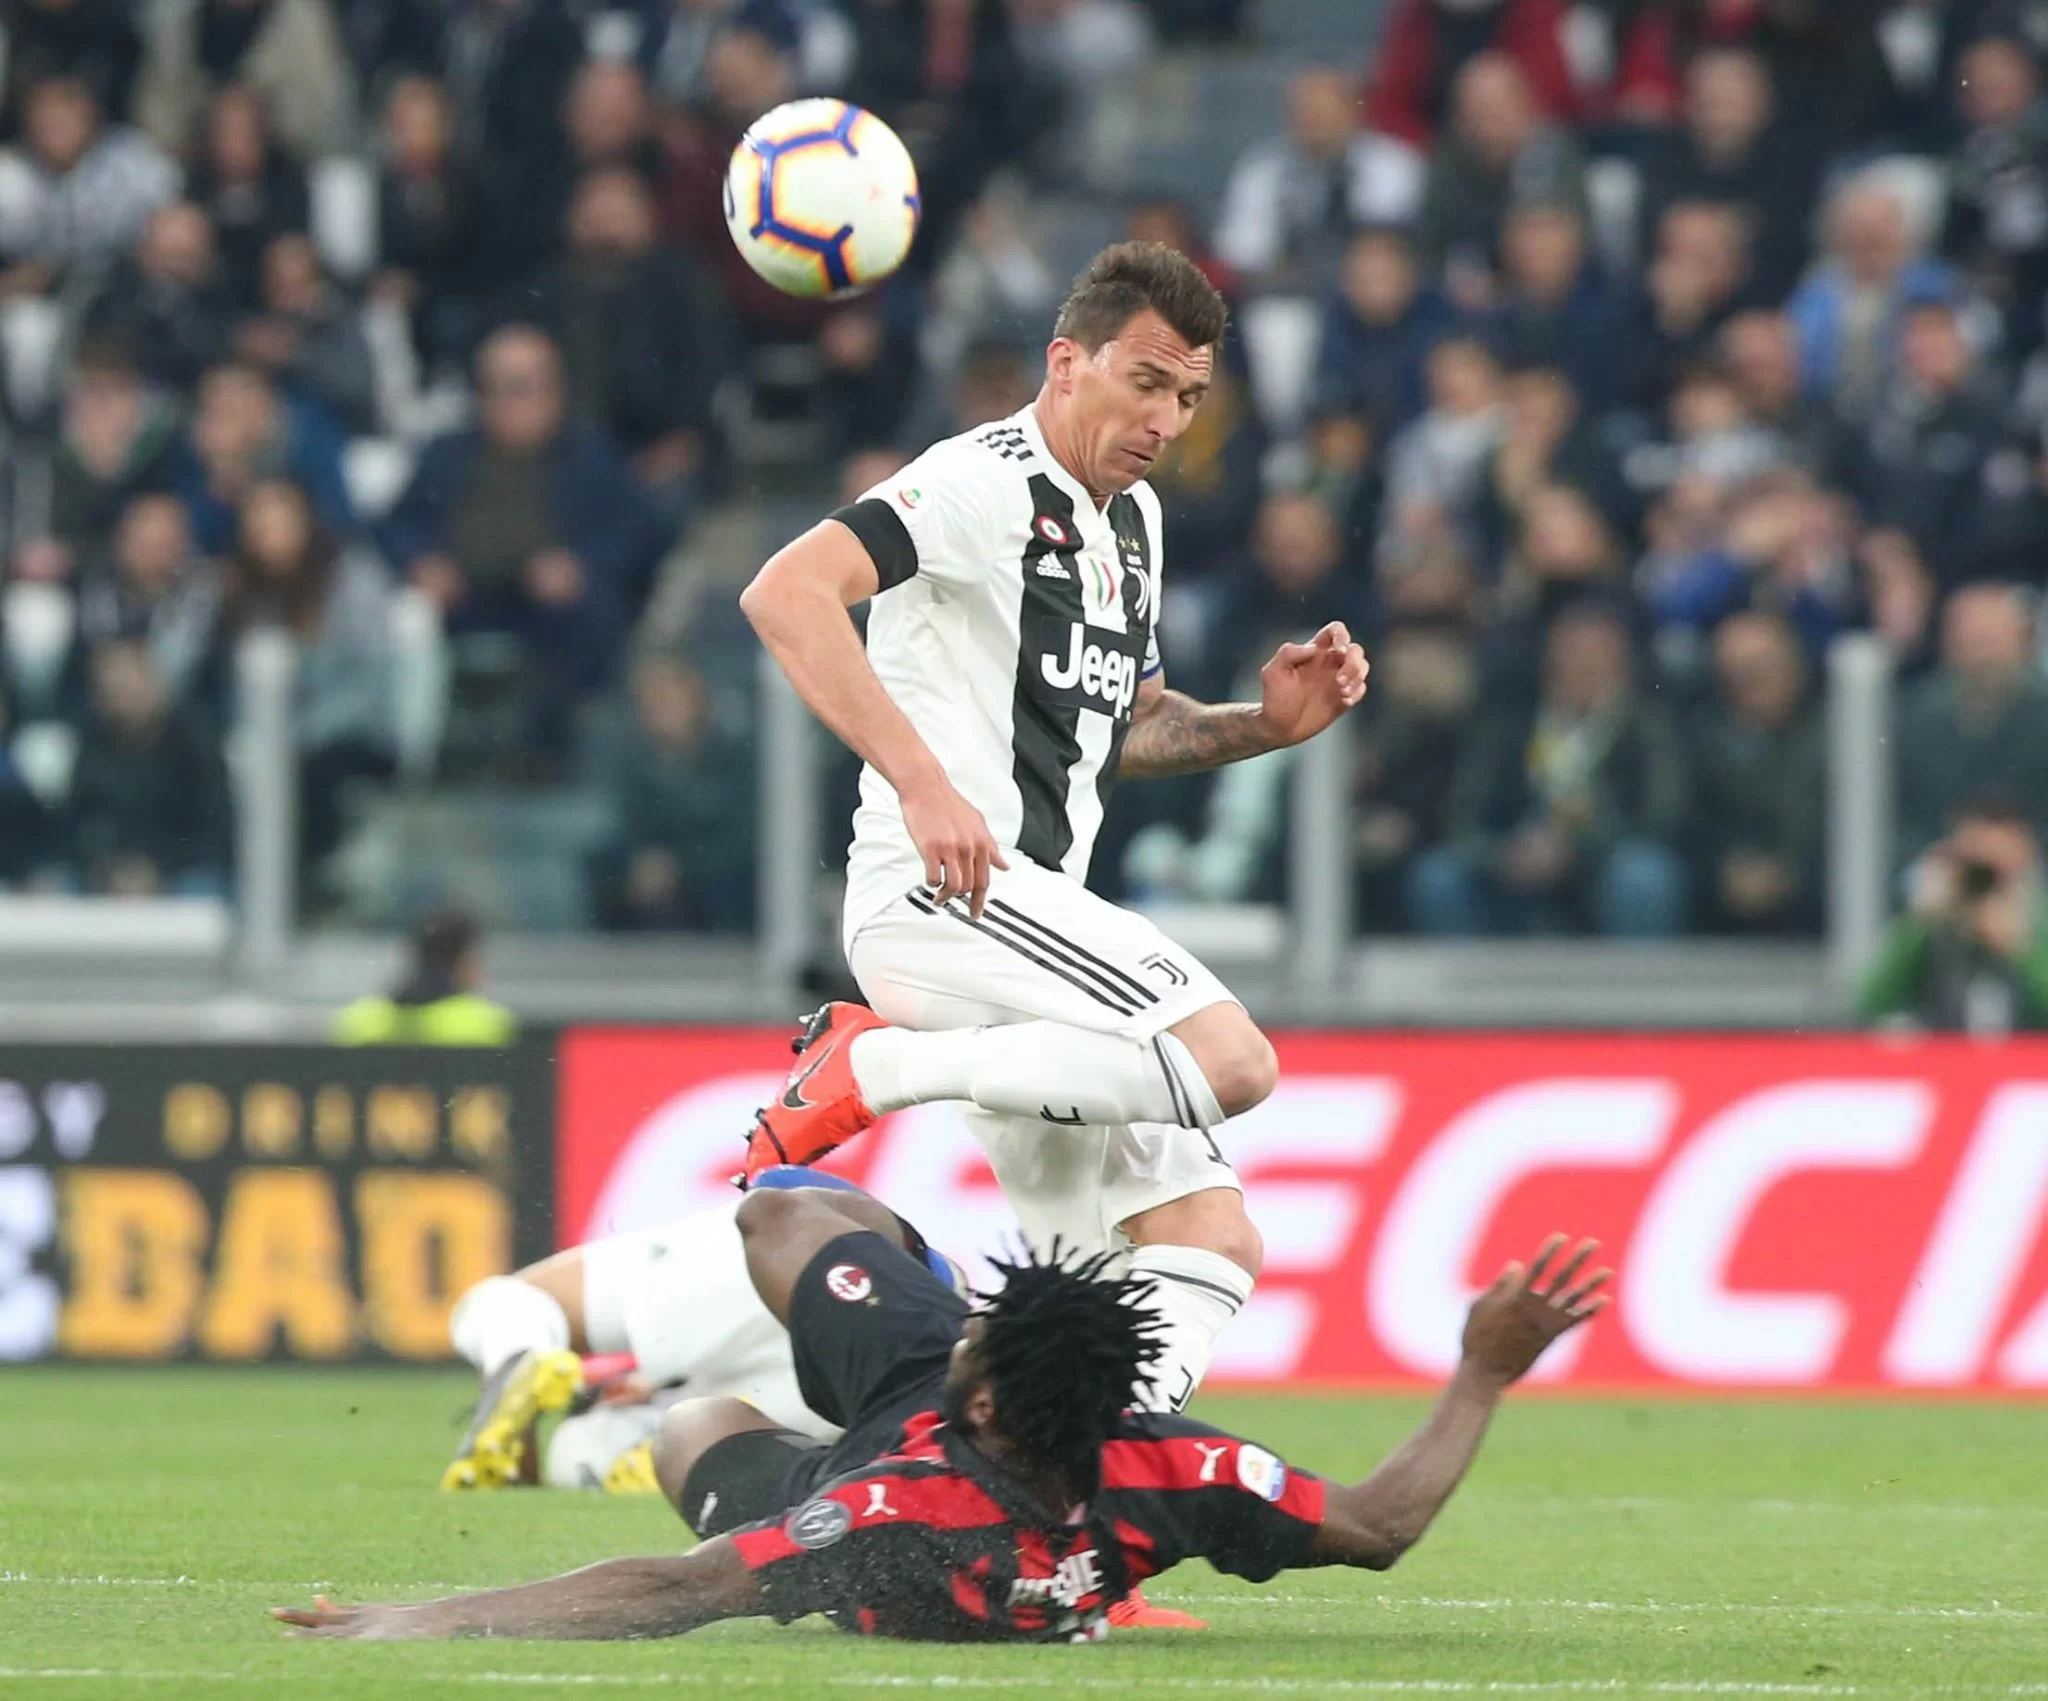 Juventus-Milan, Mandzukic assolto. “Non è stata accertata violenza”